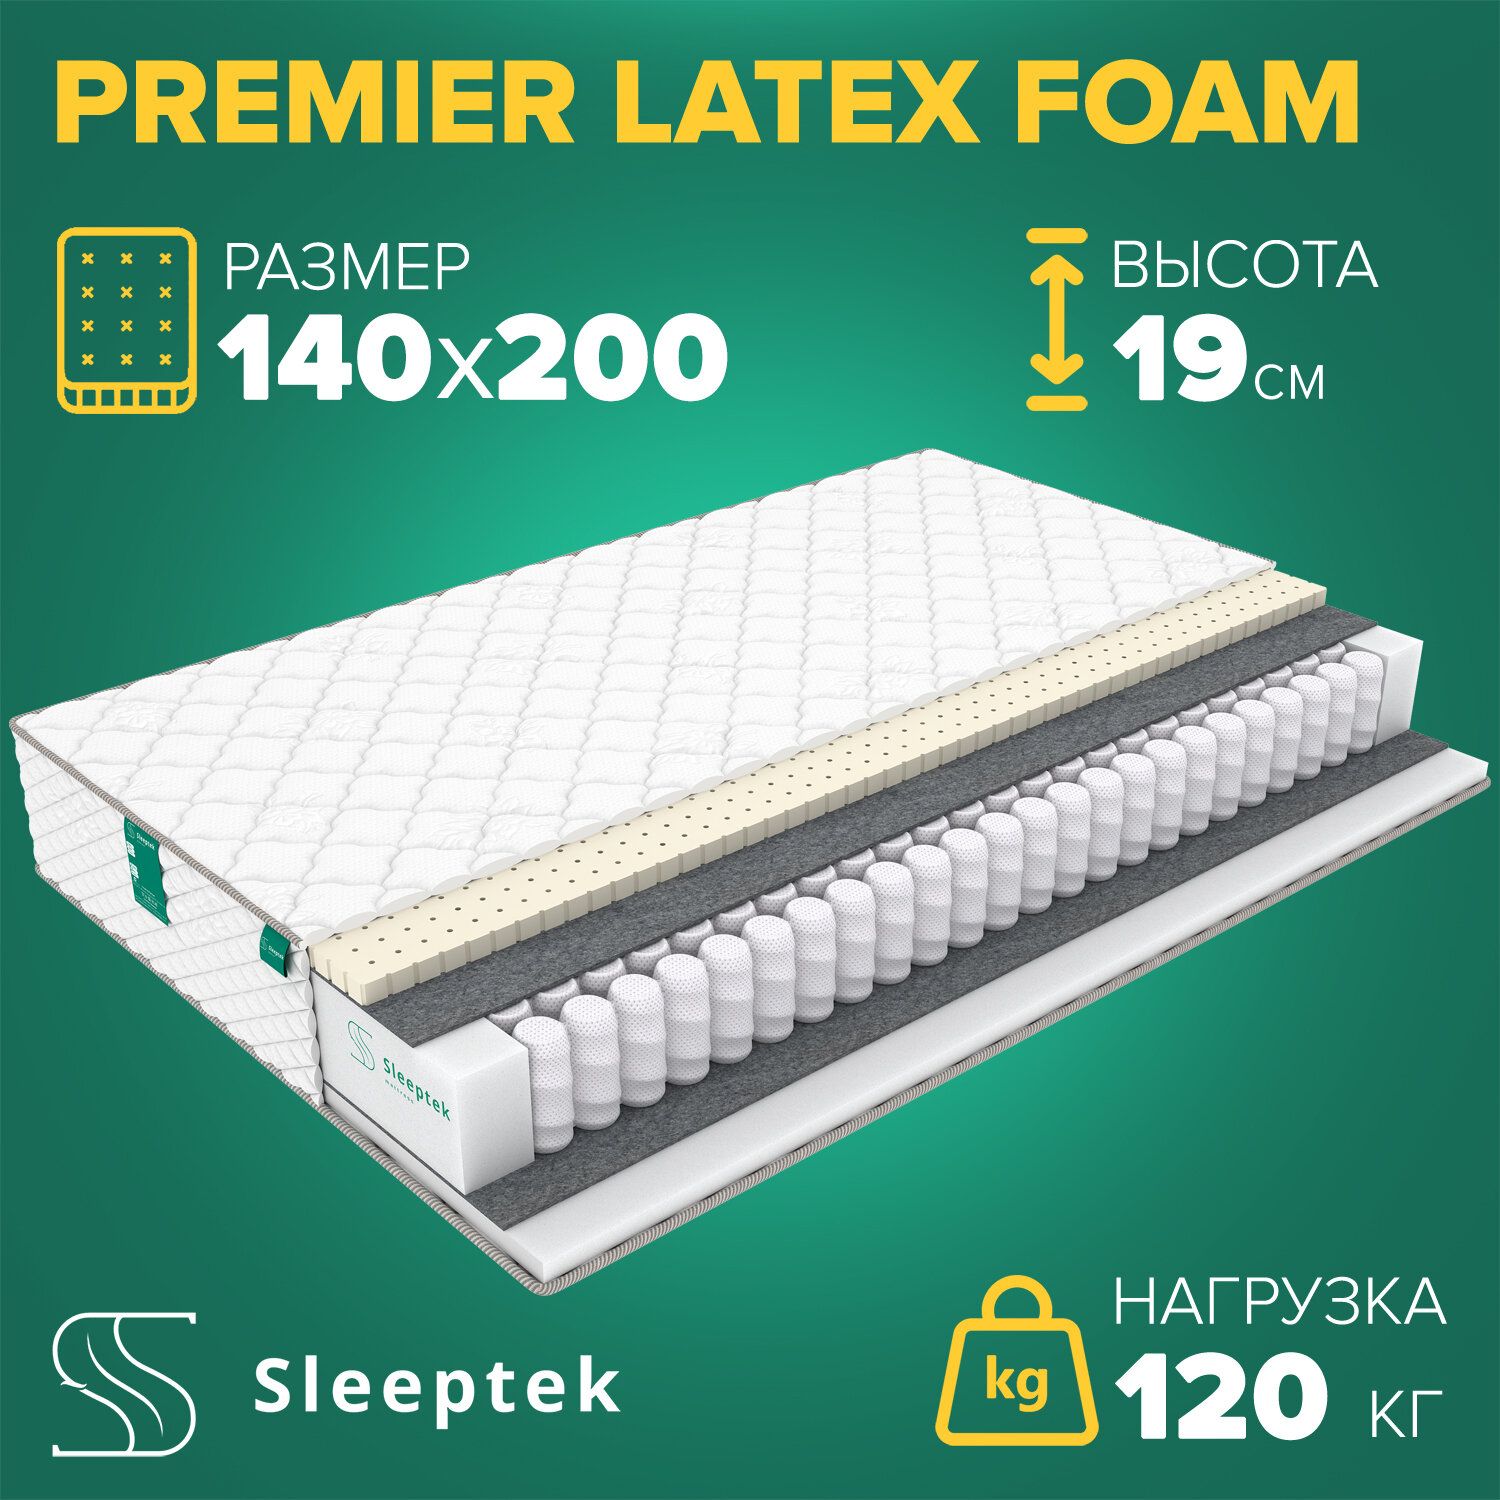  Sleeptek Premier Latex Foam 140200